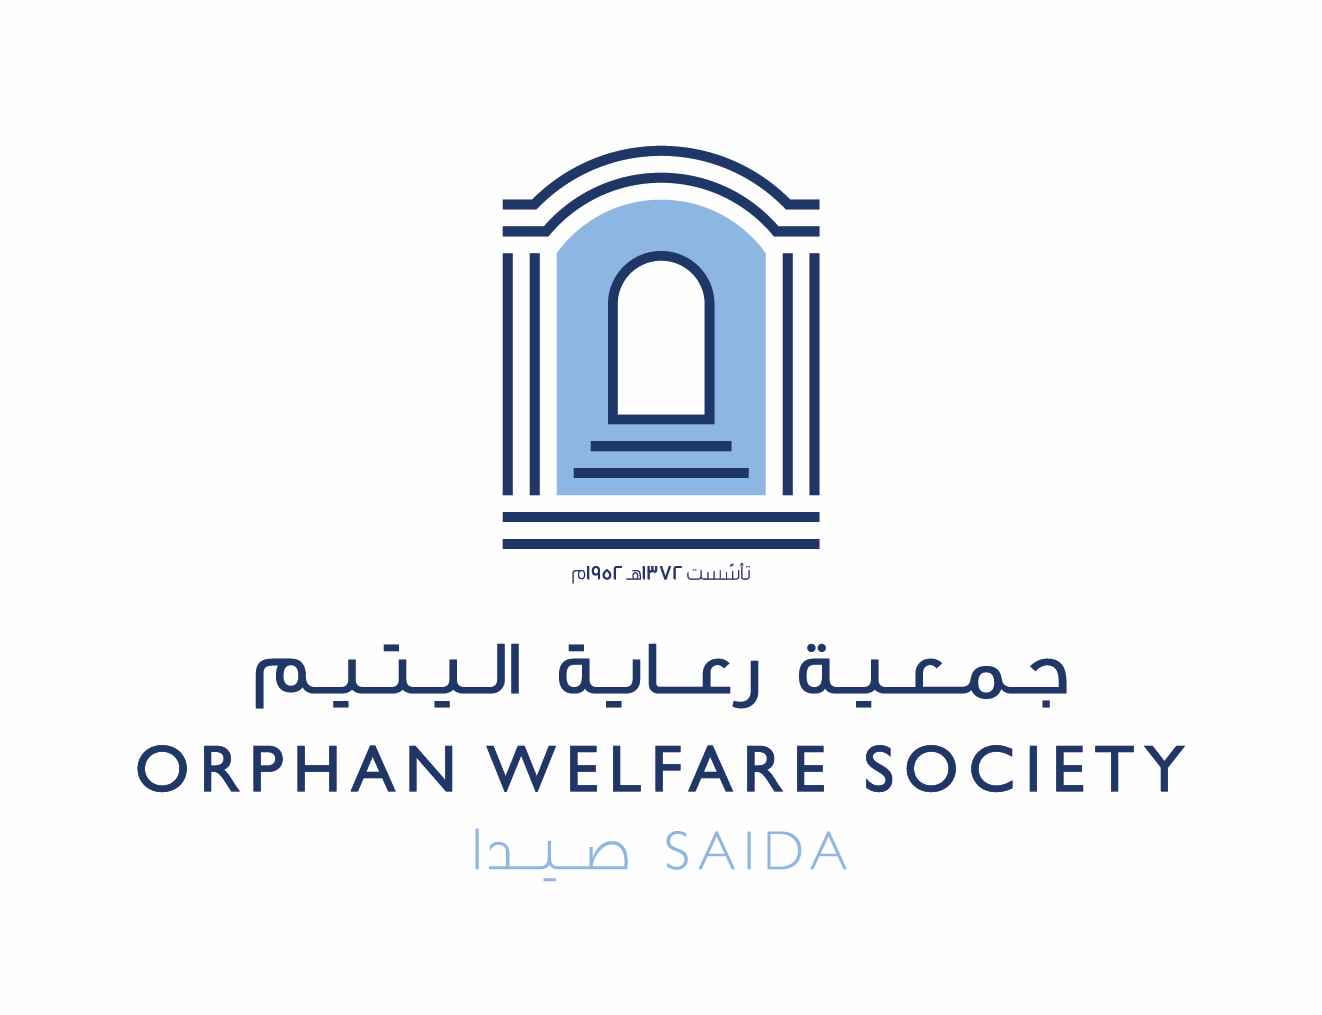 Orphan Welfare Society of Saida